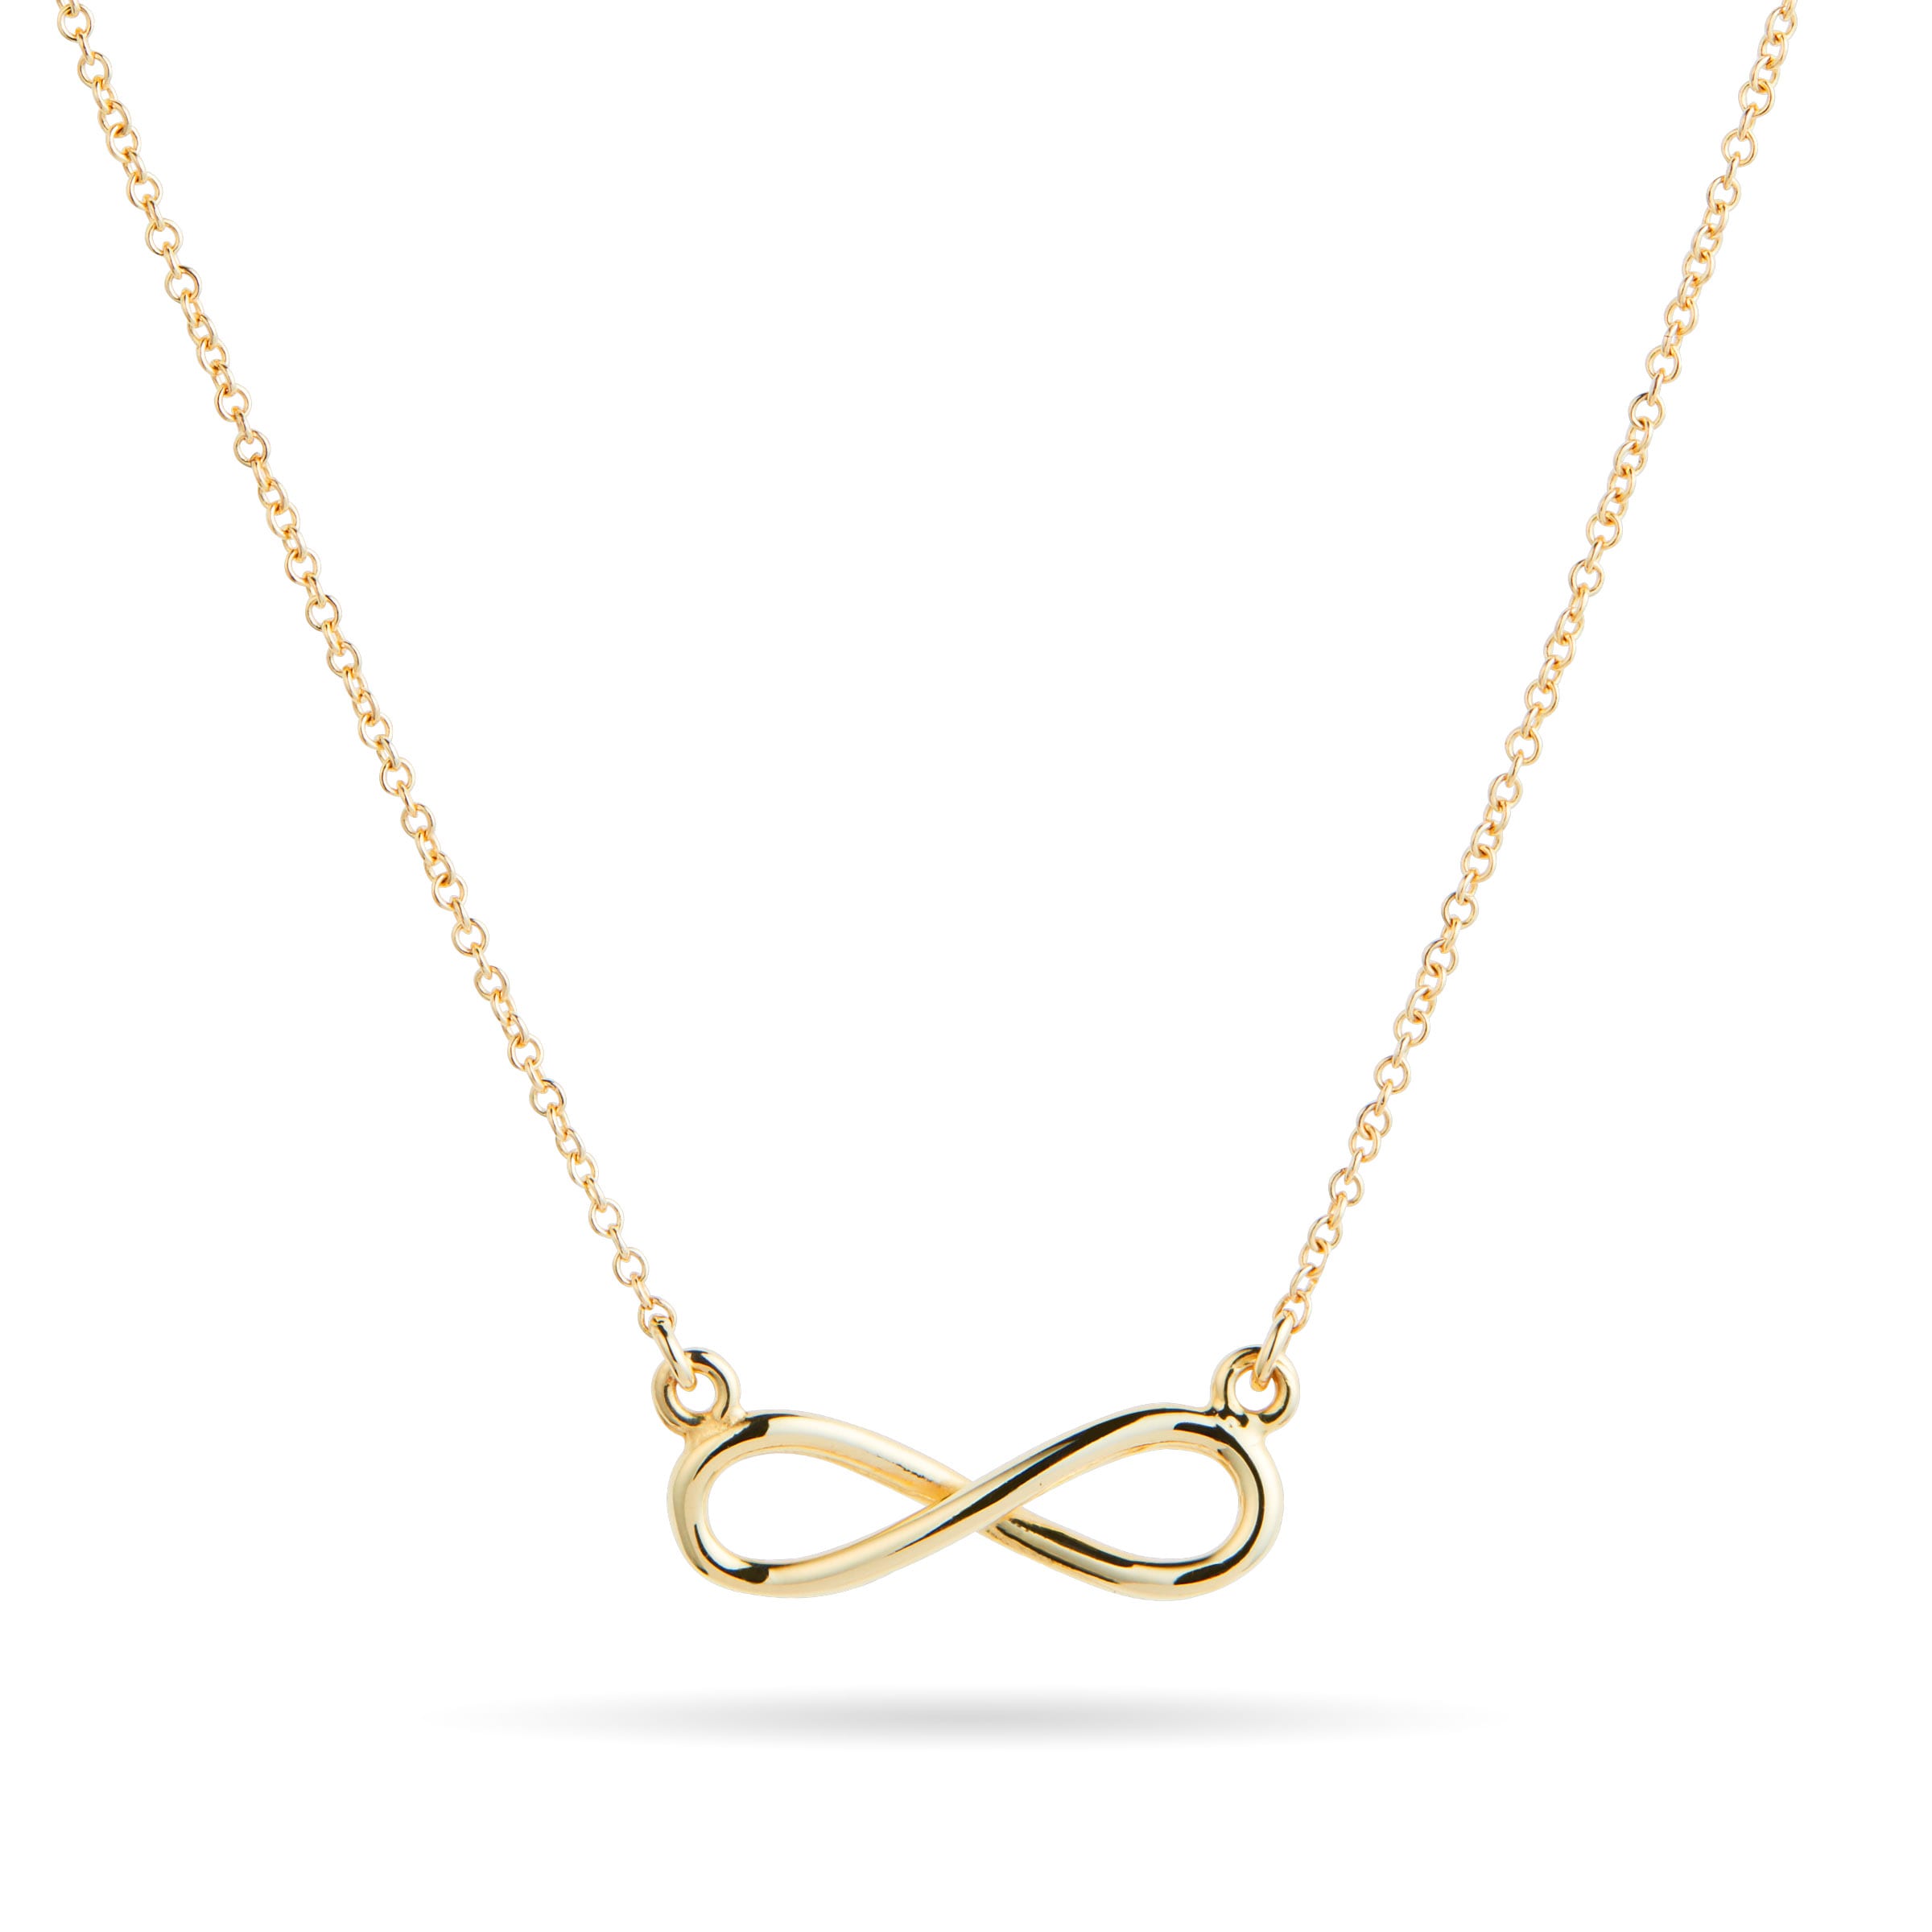 9ct Gold Circle Beaded Necklace - TK Maxx UK